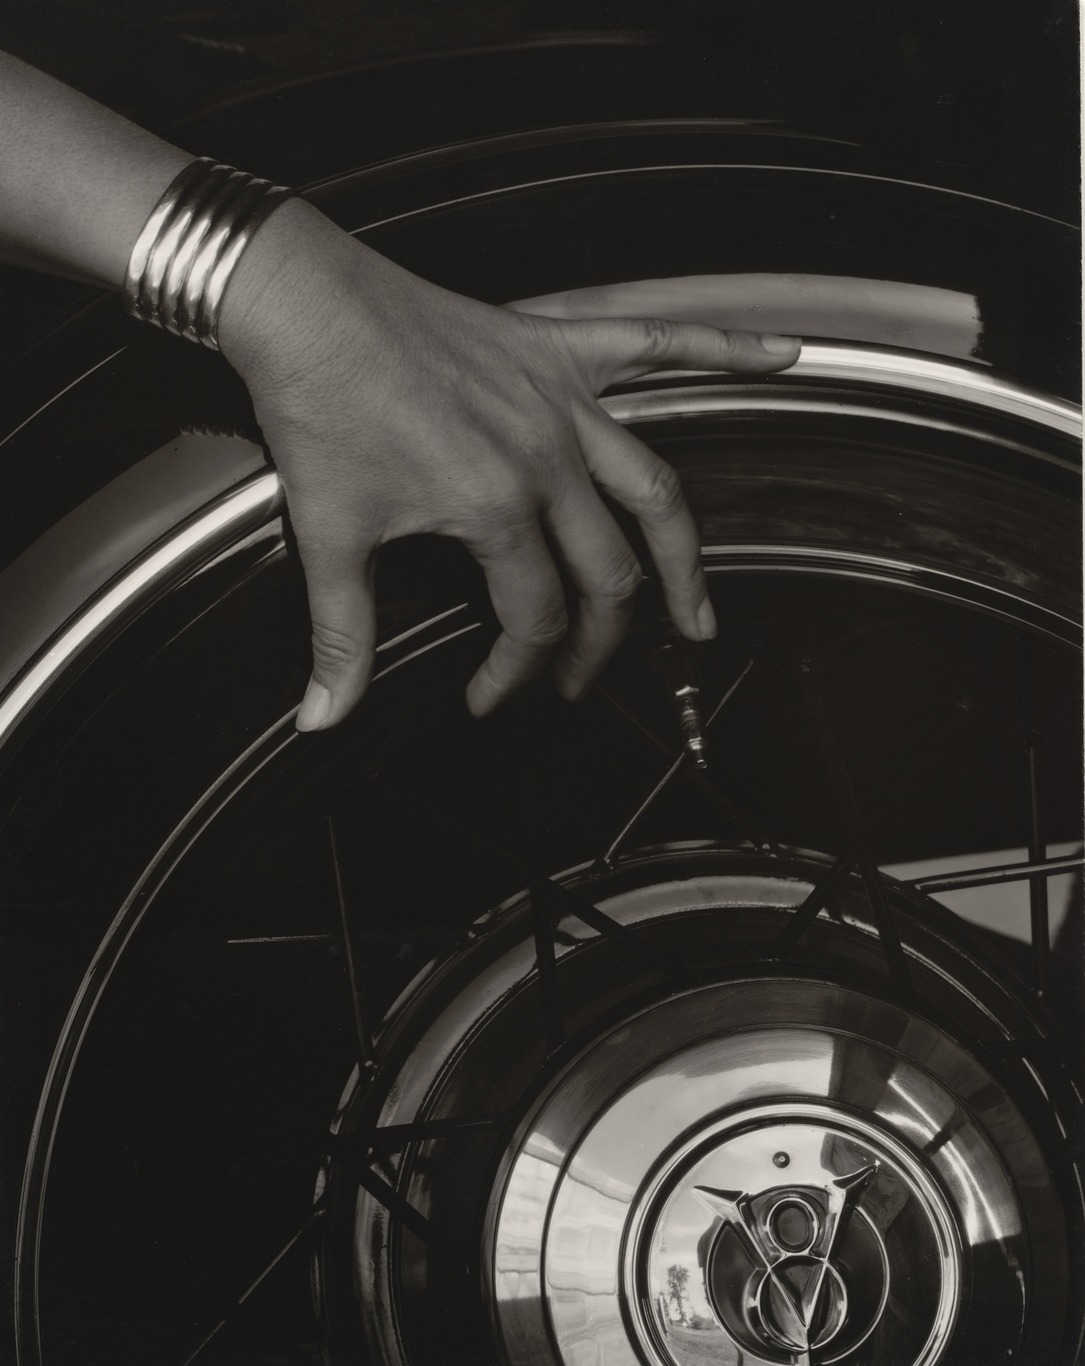 Georgia O’Keeffe, Hand and Wheel, Alfred Stieglitz, 1933